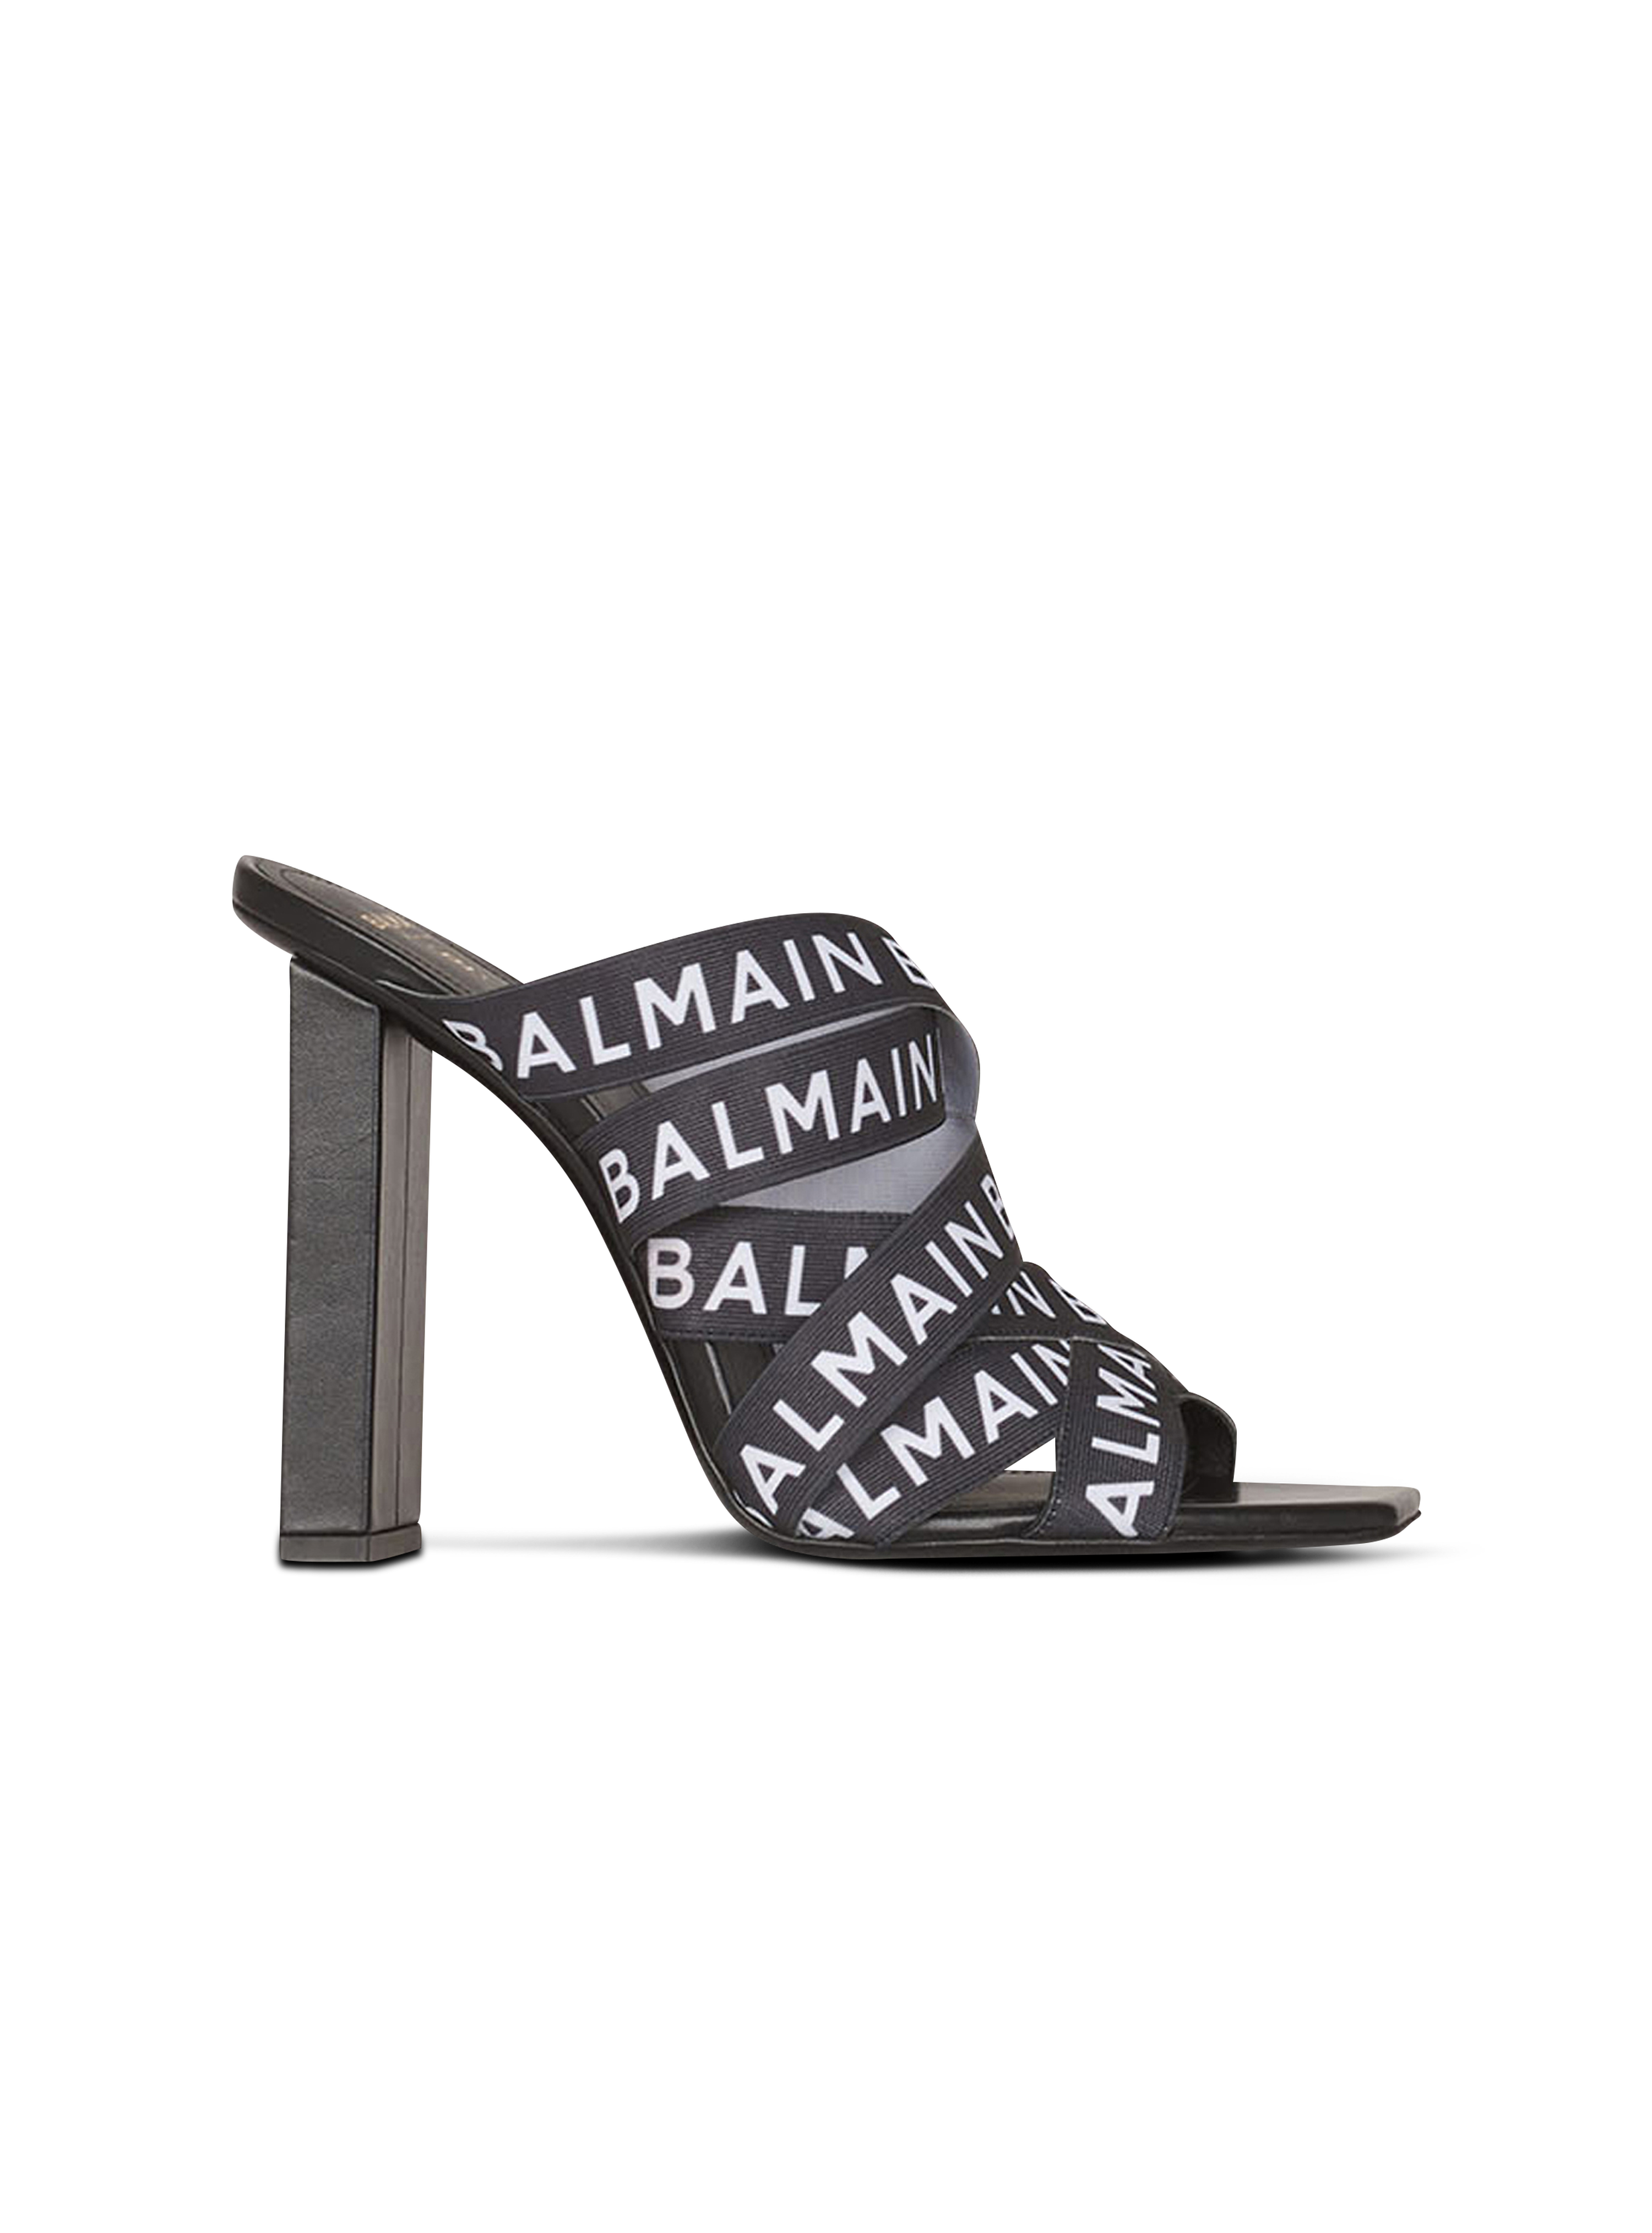 Sandales Union avec logo Balmain, noir